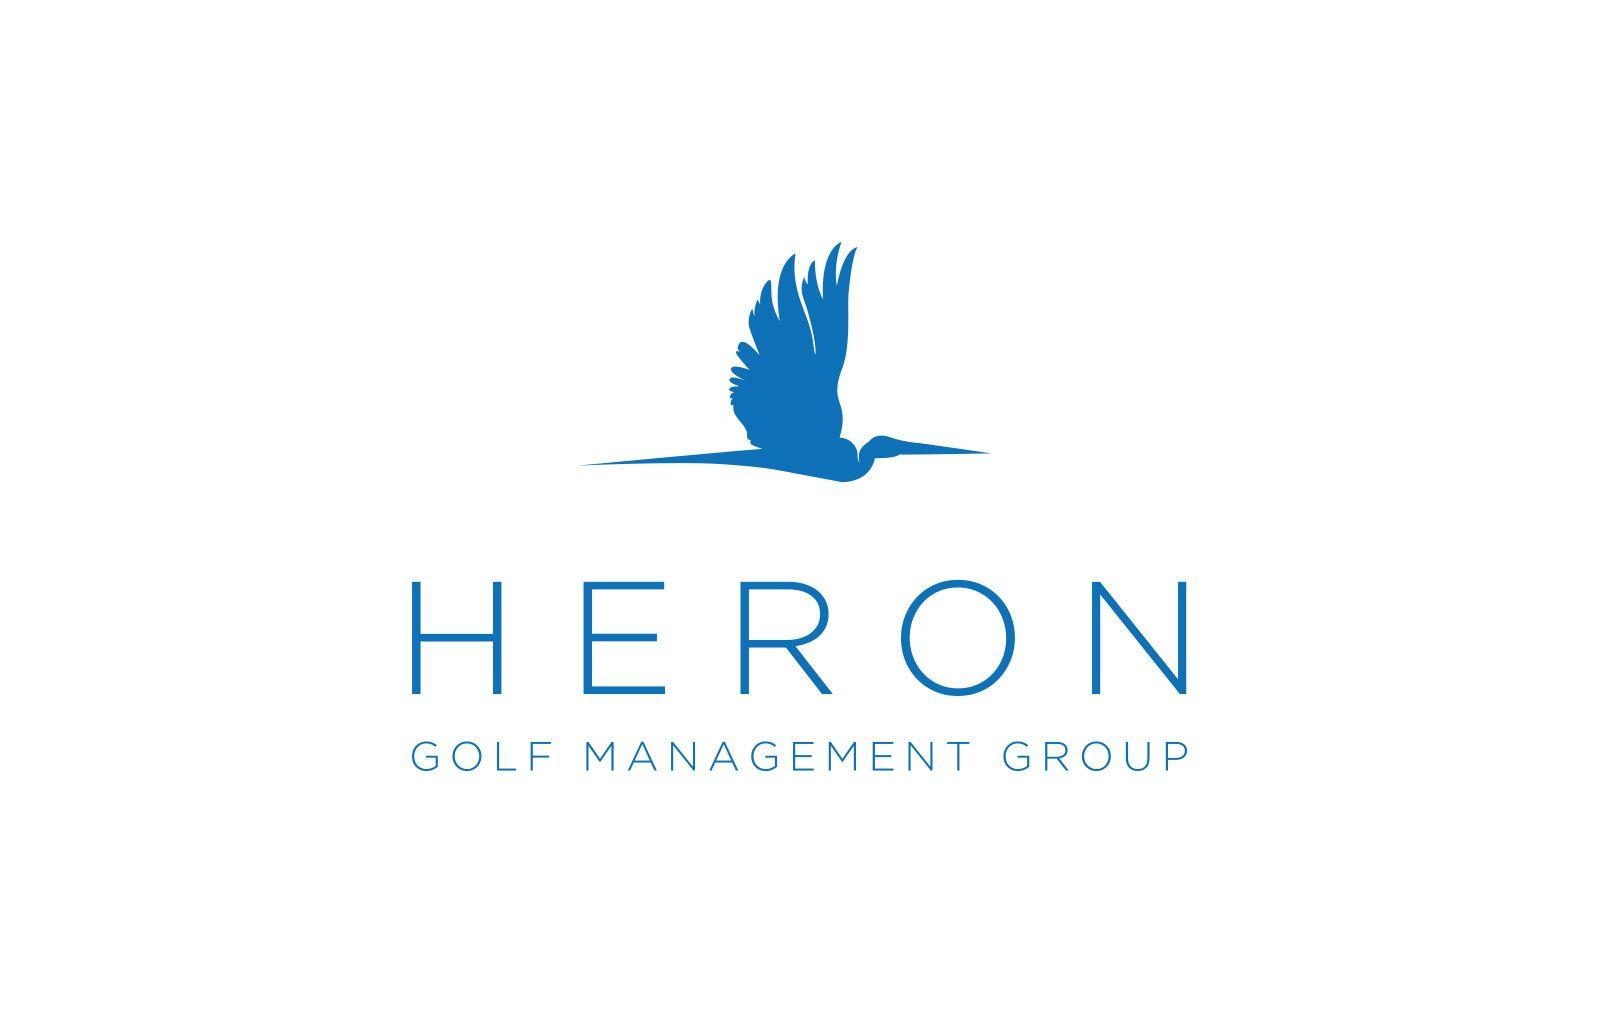 Heron Logo - aztlansoft logo design - 48HoursLogo.com